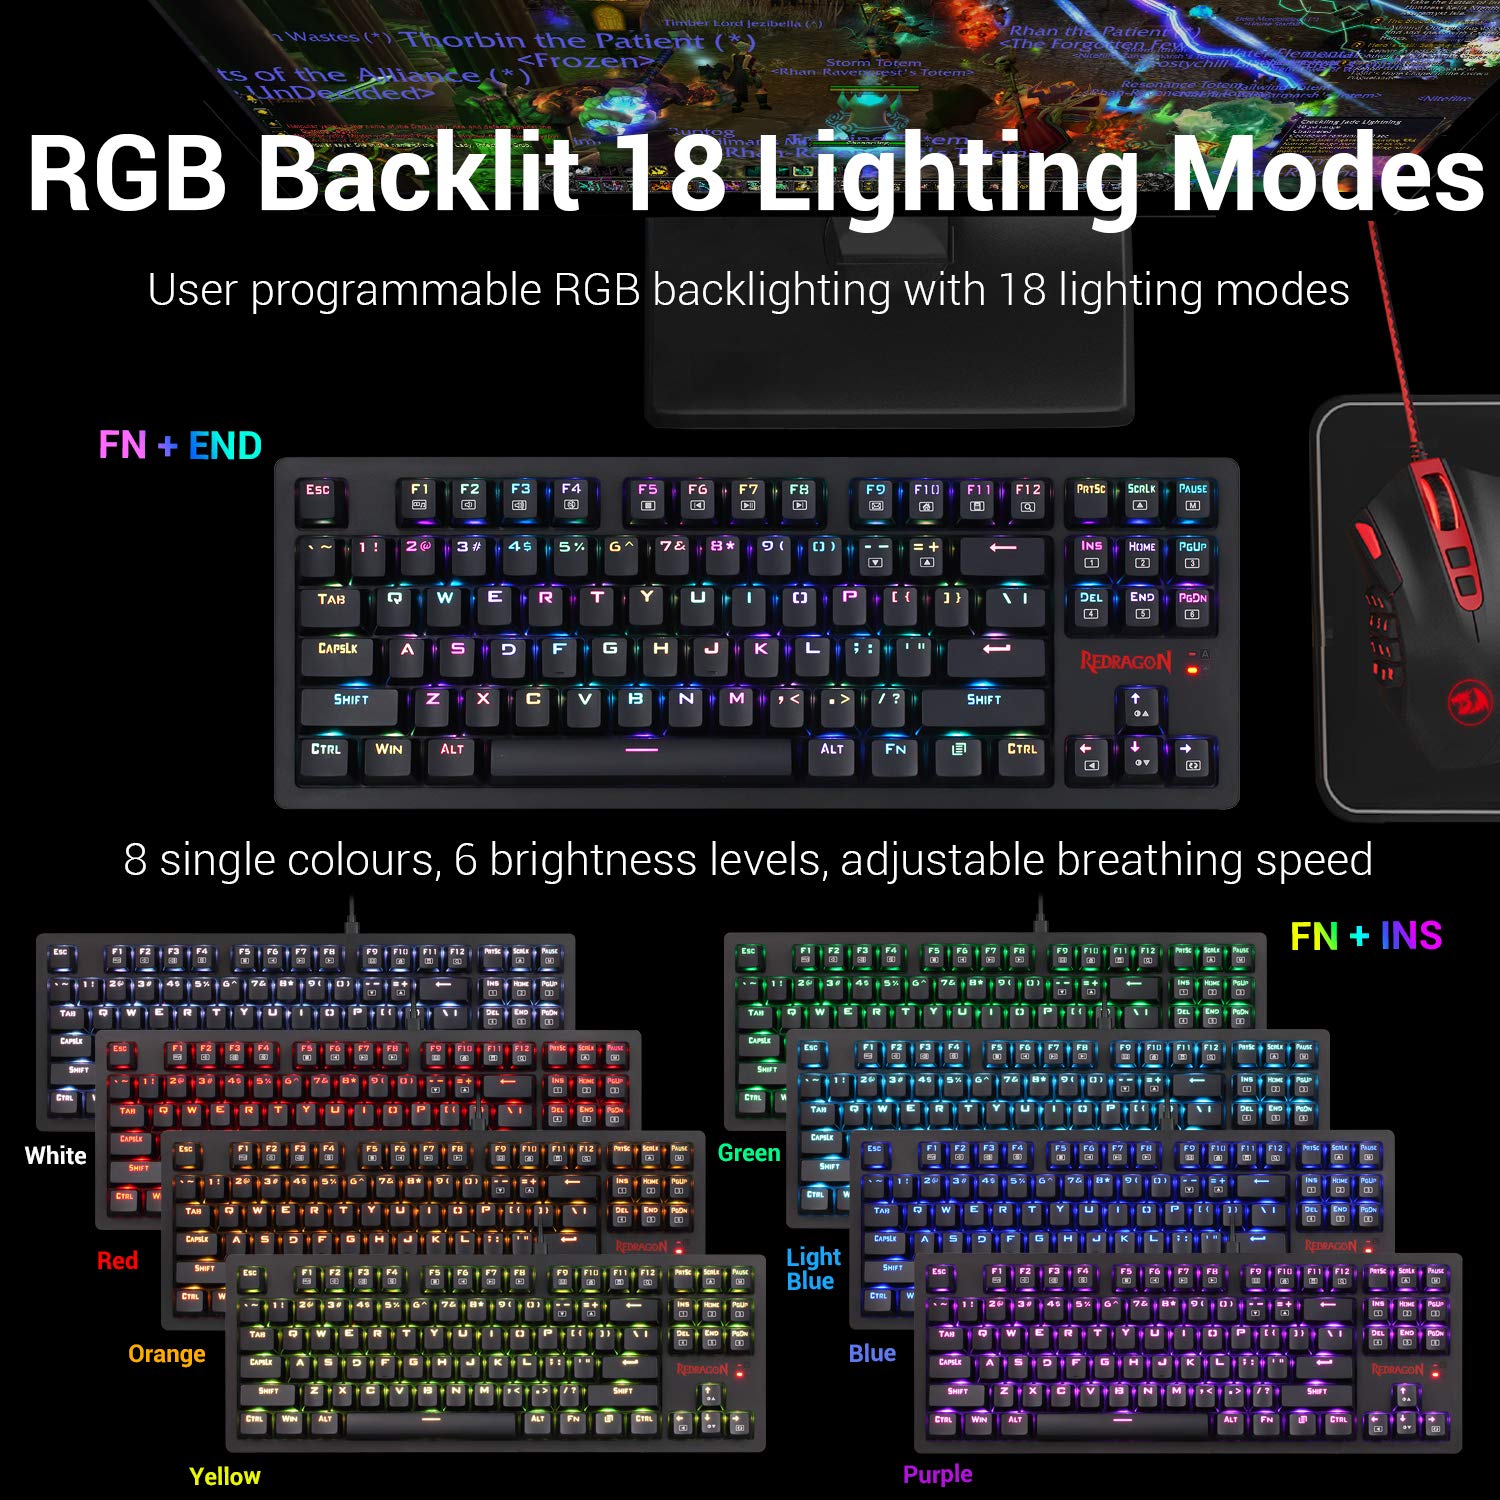 Redragon K598 TKL Wireless Mechanical Keyboard Brown Switches Compact 87 Key Tenkeyless RGB LED Backlit Gaming Keyboard for Windows PC Gamers